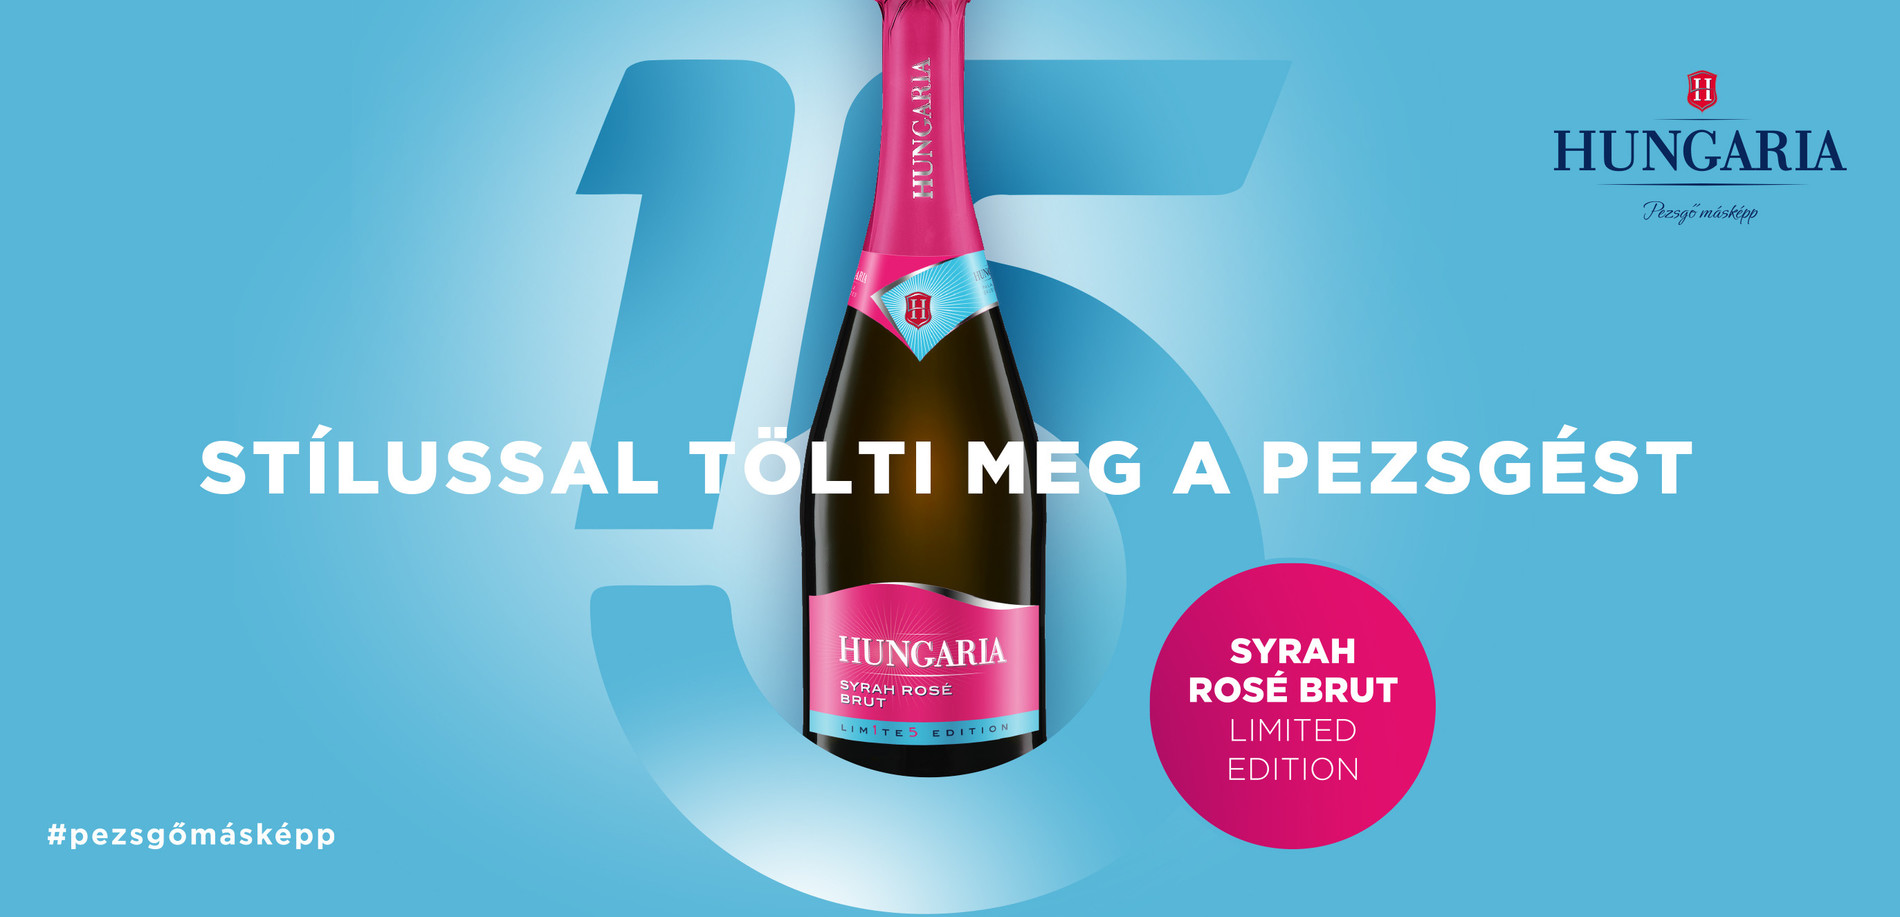 Hungaria Syrah Rosé Brut Limited Edition